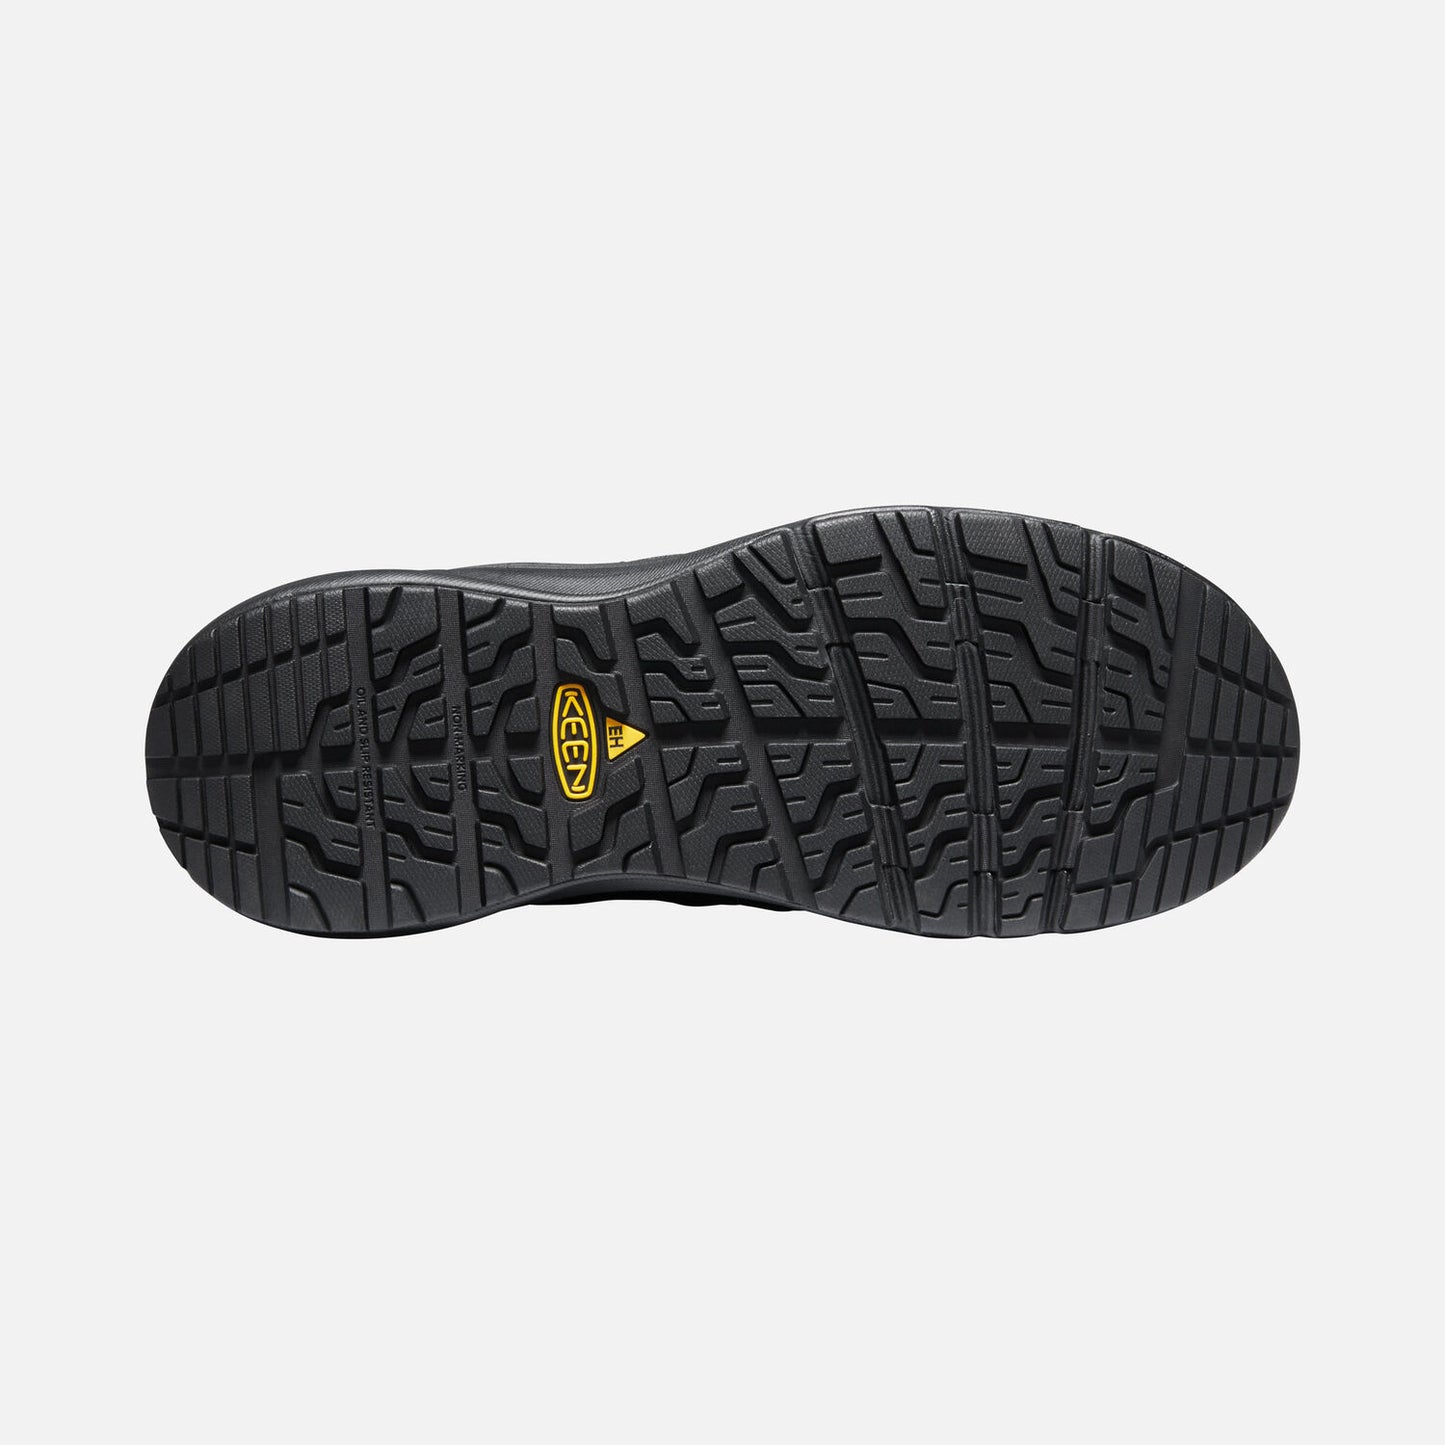 1024586 Keen Carbon Toe Mesh Sneaker (Black)